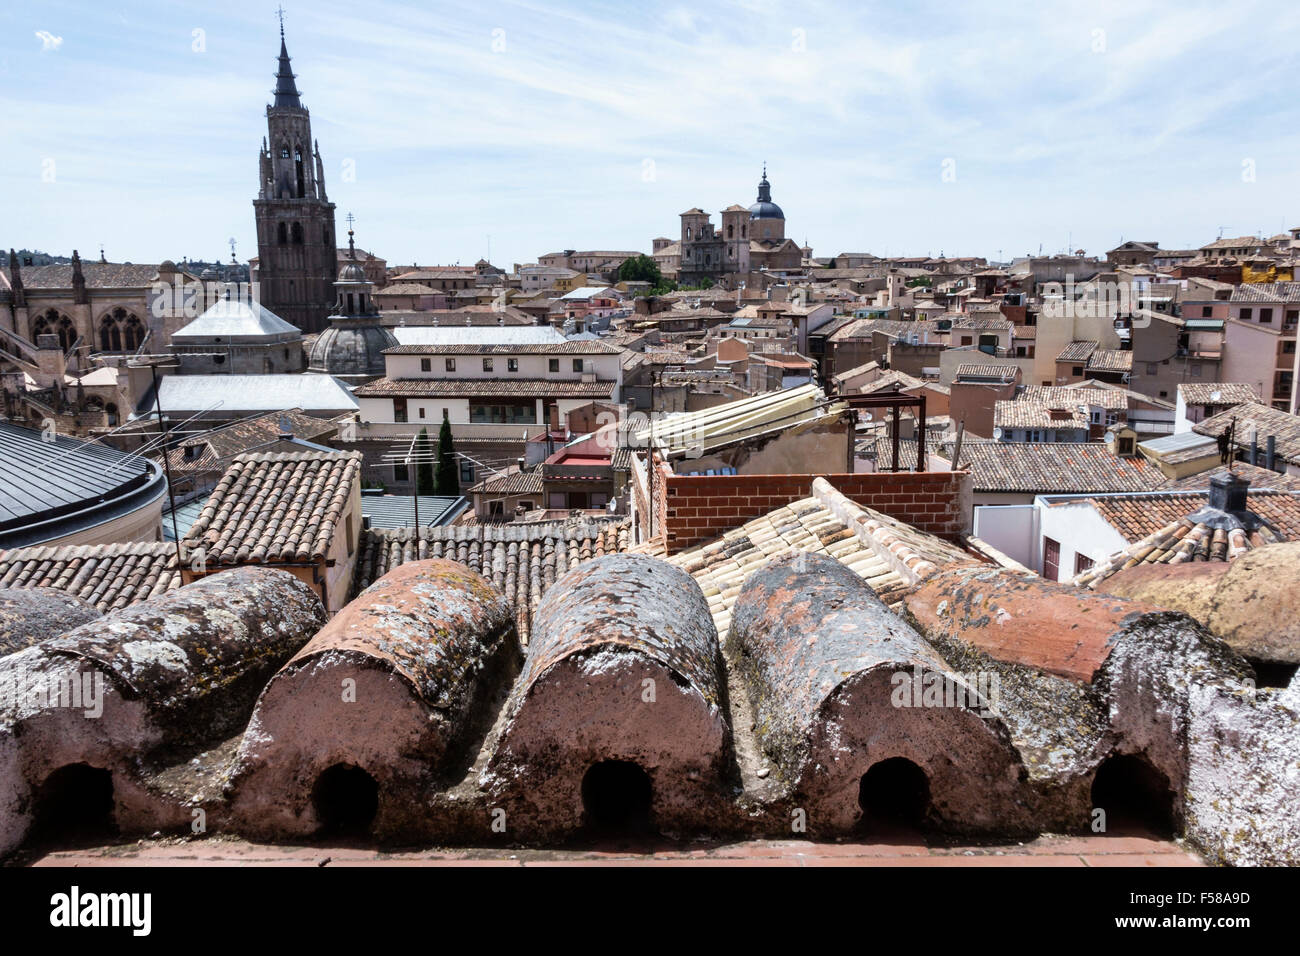 Toledo Spain,Europe,Spanish,Hispanic World Heritage Site,historic center,rooftops,city skyline,bell tower,Primate Cathedral of Saint Mary of Toledo,Ca Stock Photo